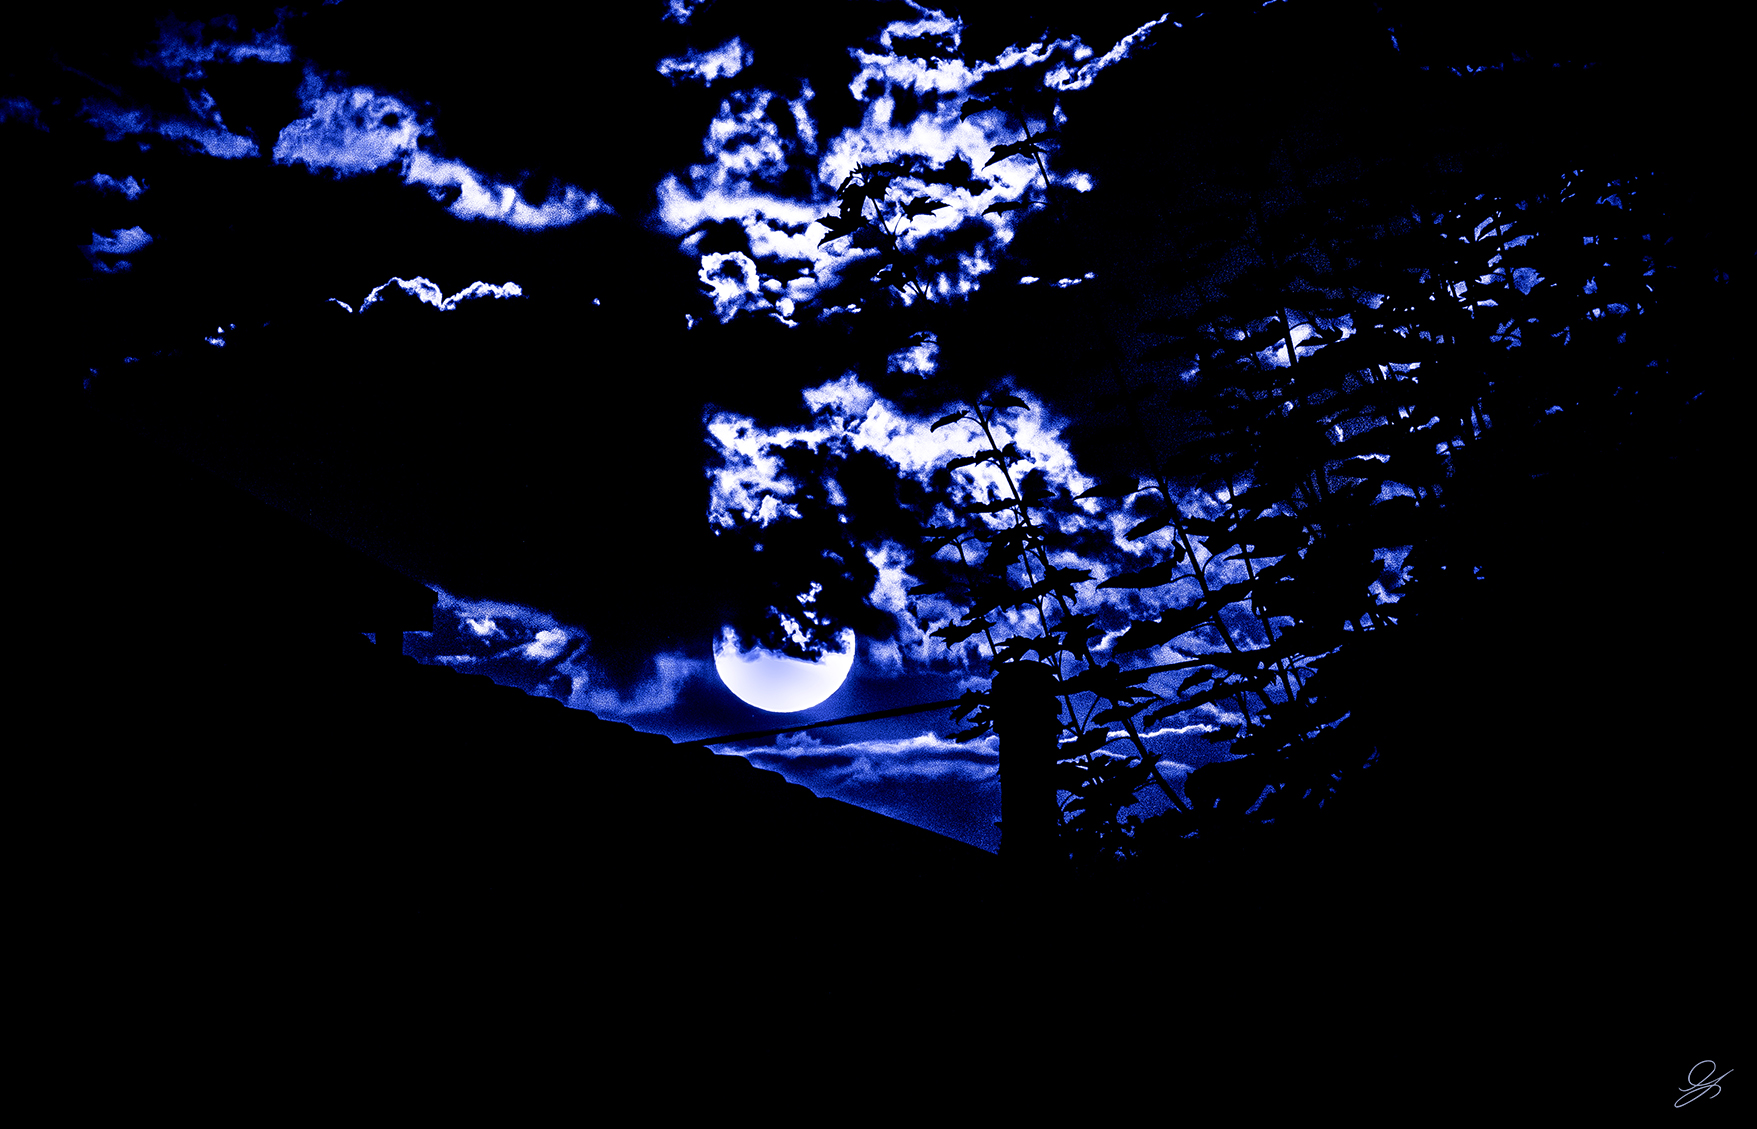 In the moonlight?...